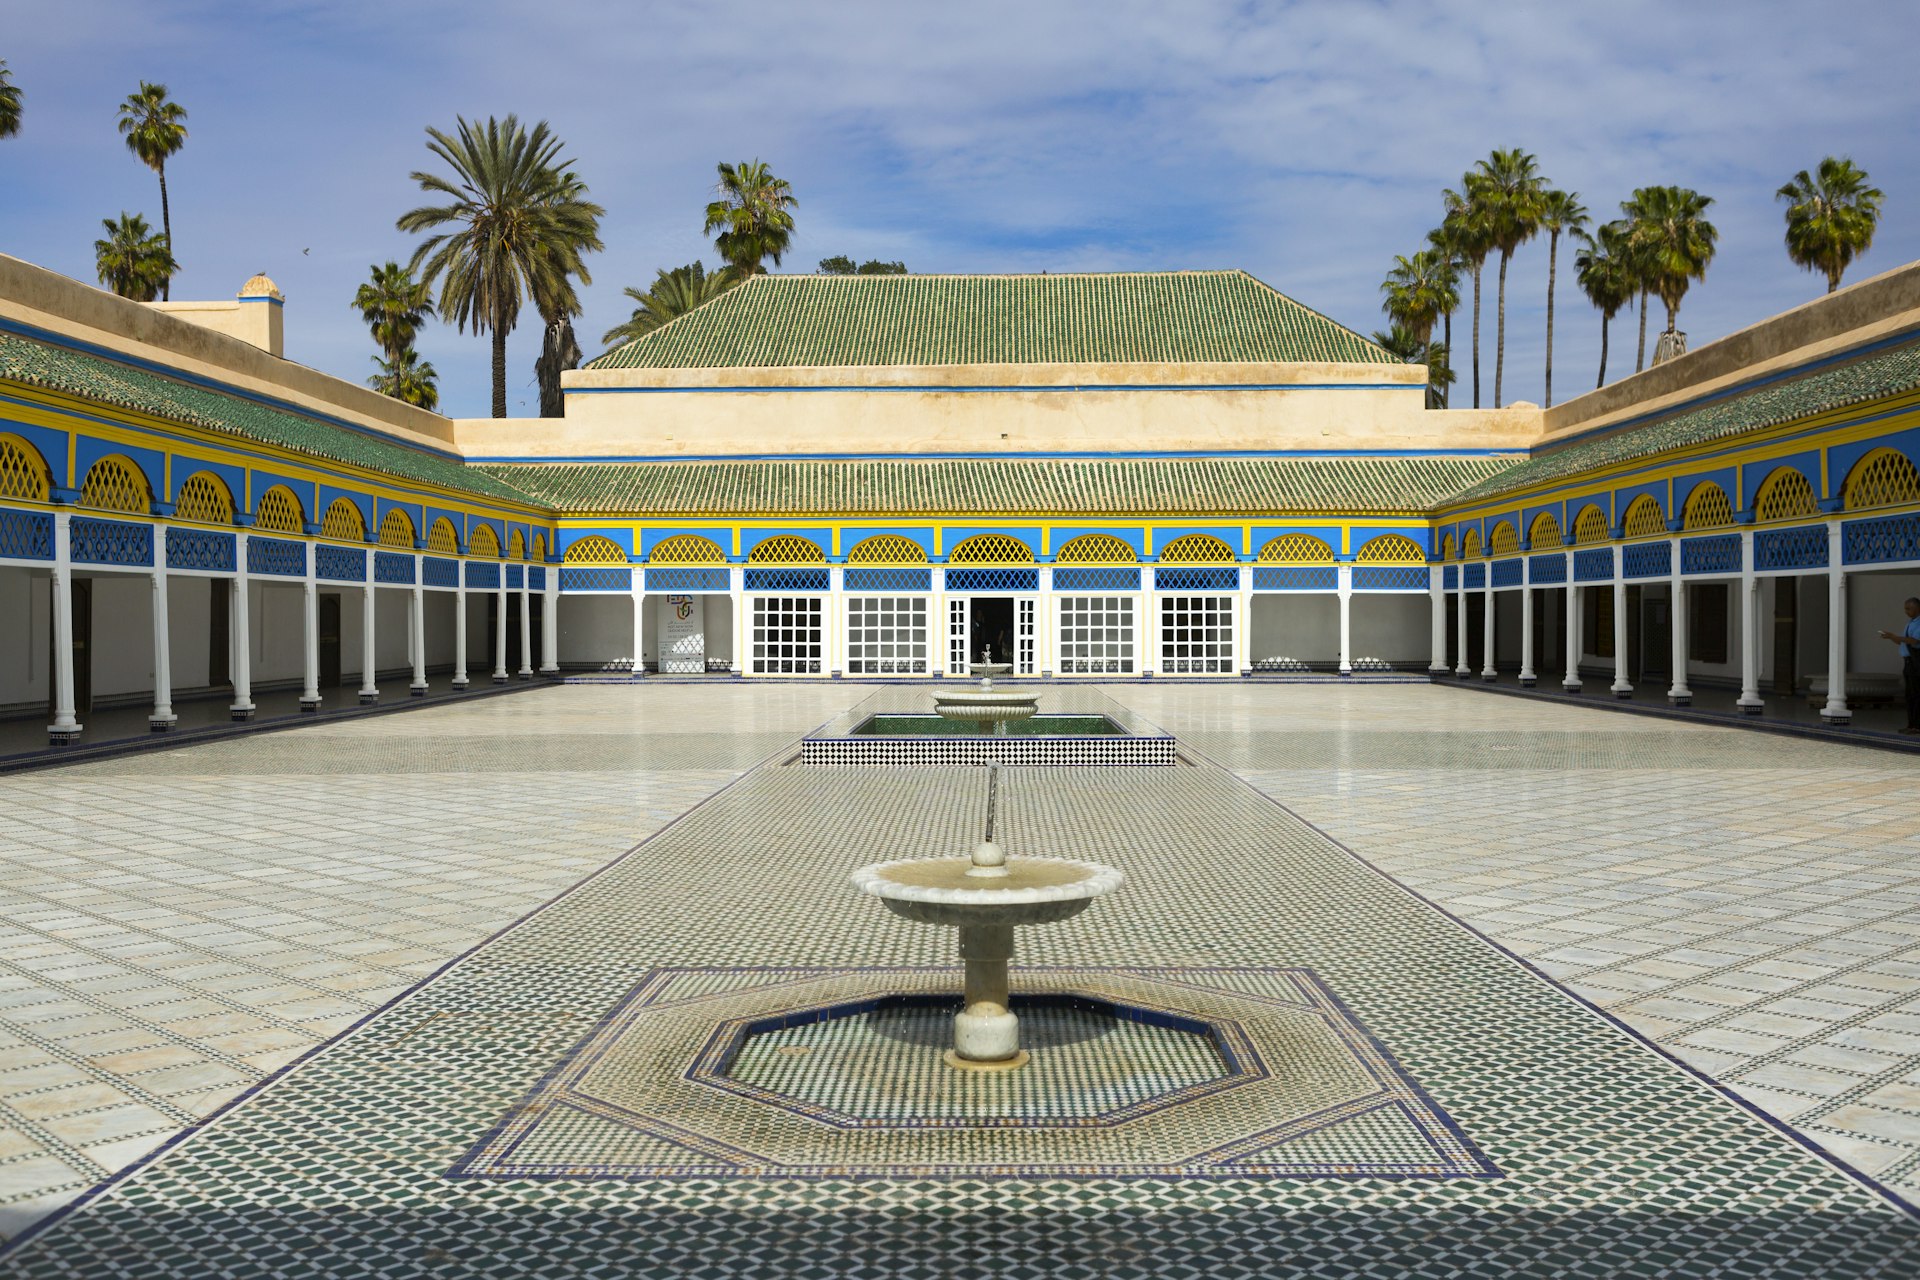 Courtyard at Bahia Palace in Marrakesh, Morocco